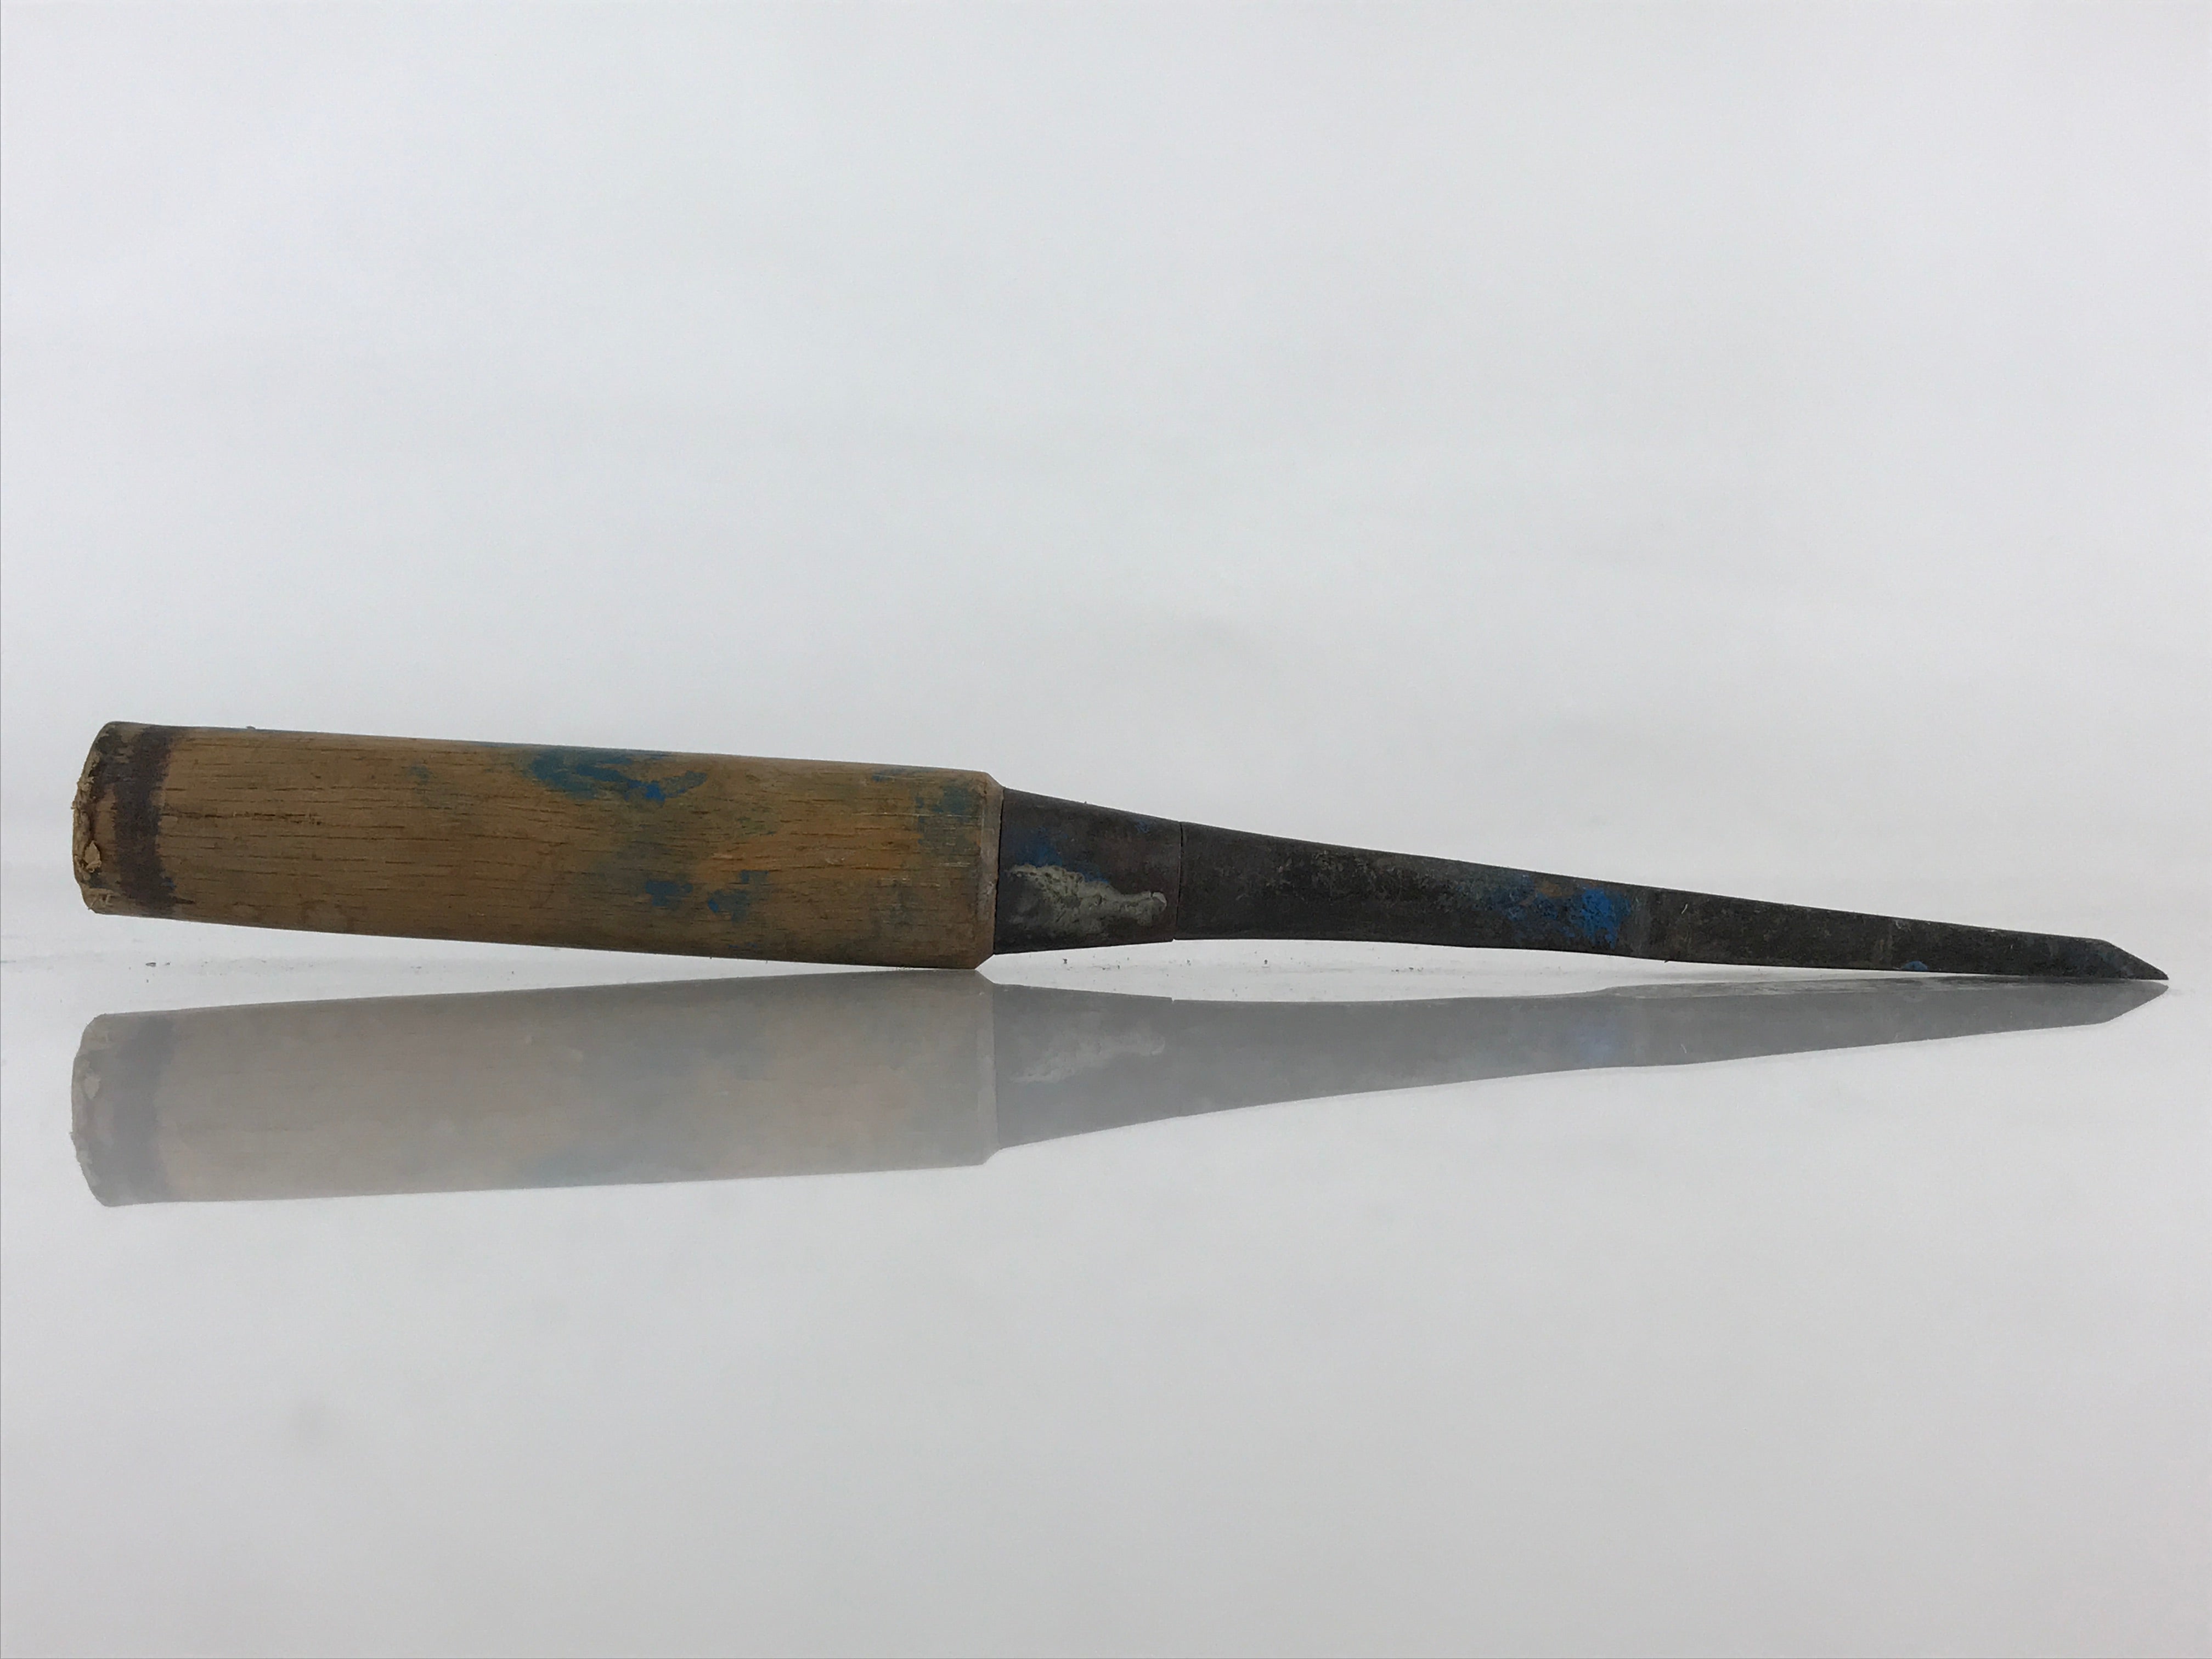 Japanese Chisel Nomi Carpentry Vtg Woodworking Tool 21.3 cm Blade 